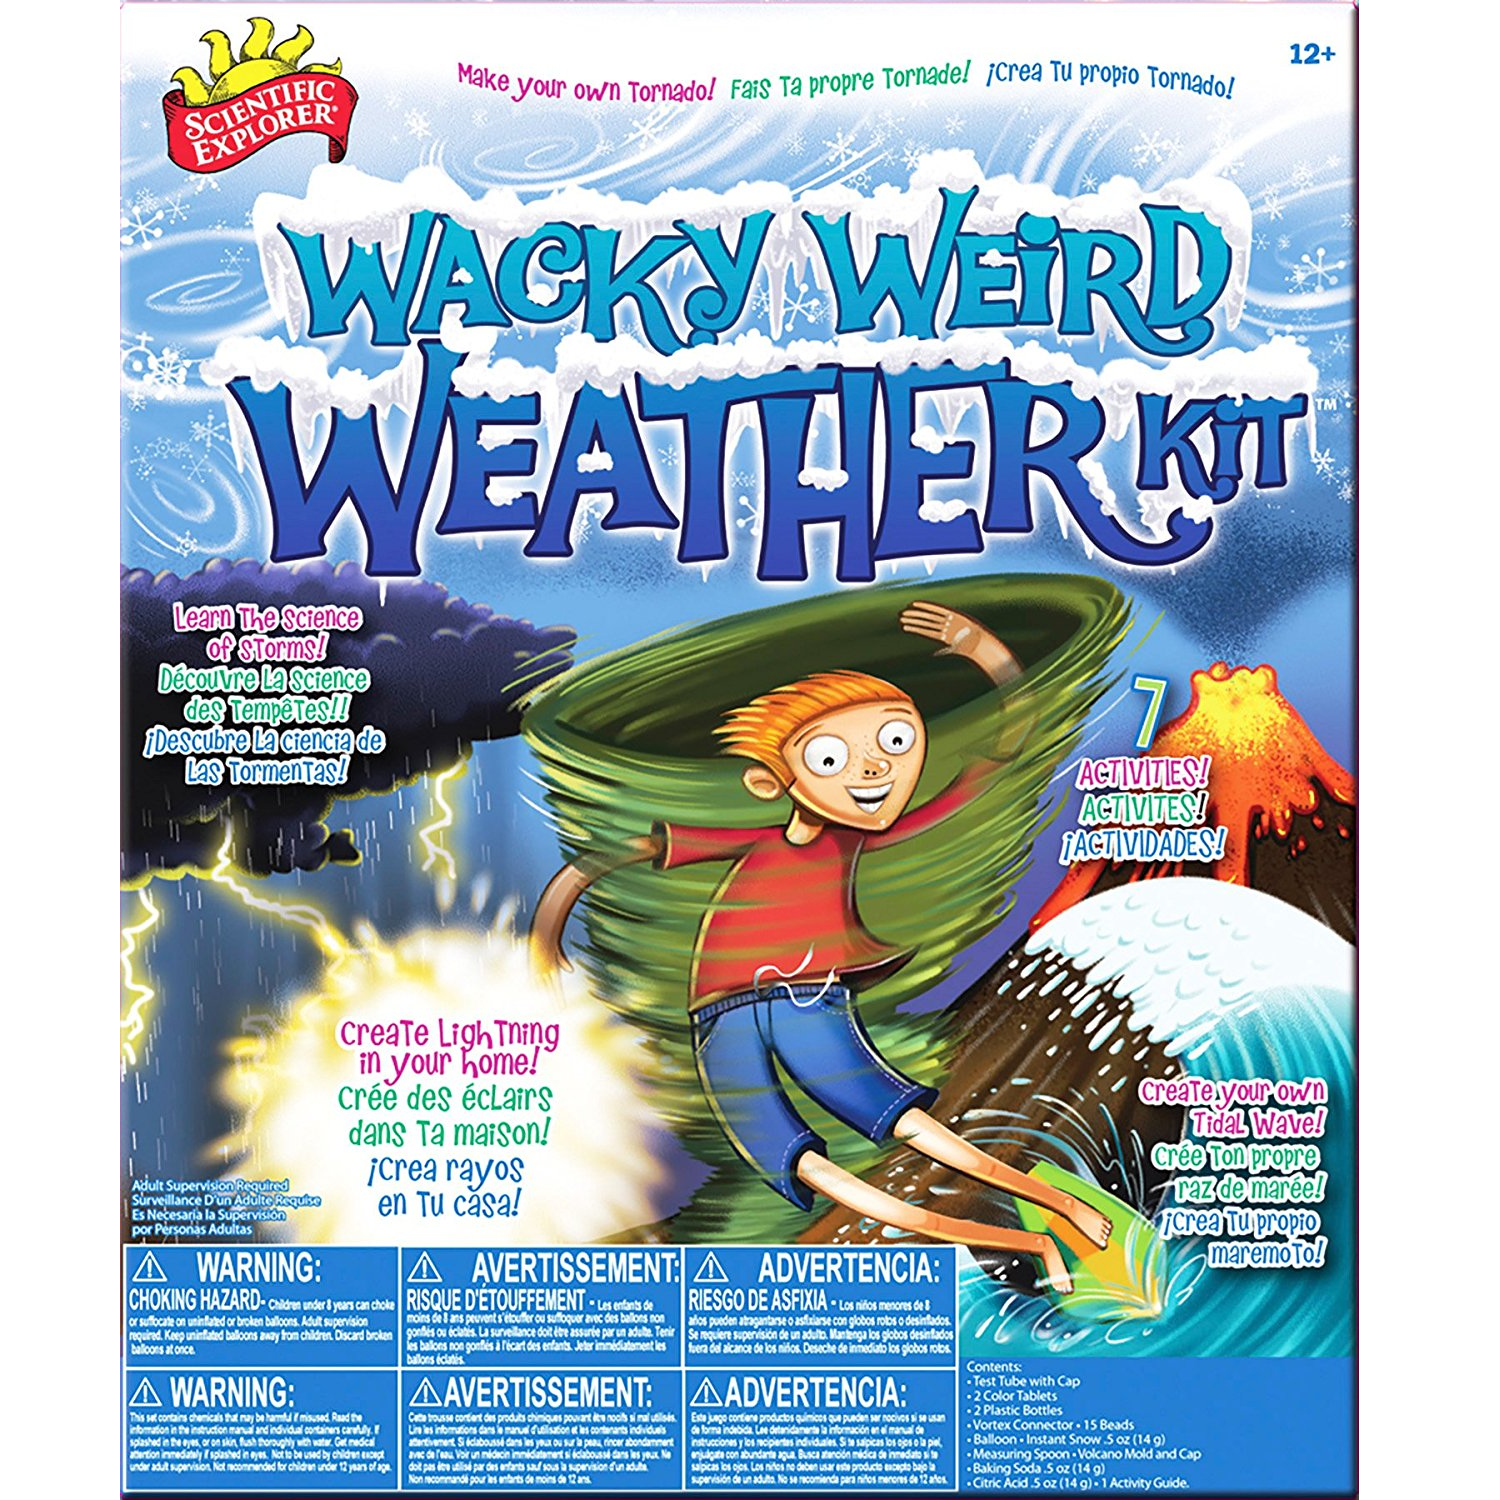 Scientific Explorer Wacky Weird Weather Kit Only $9.05! (Reg $26.99)